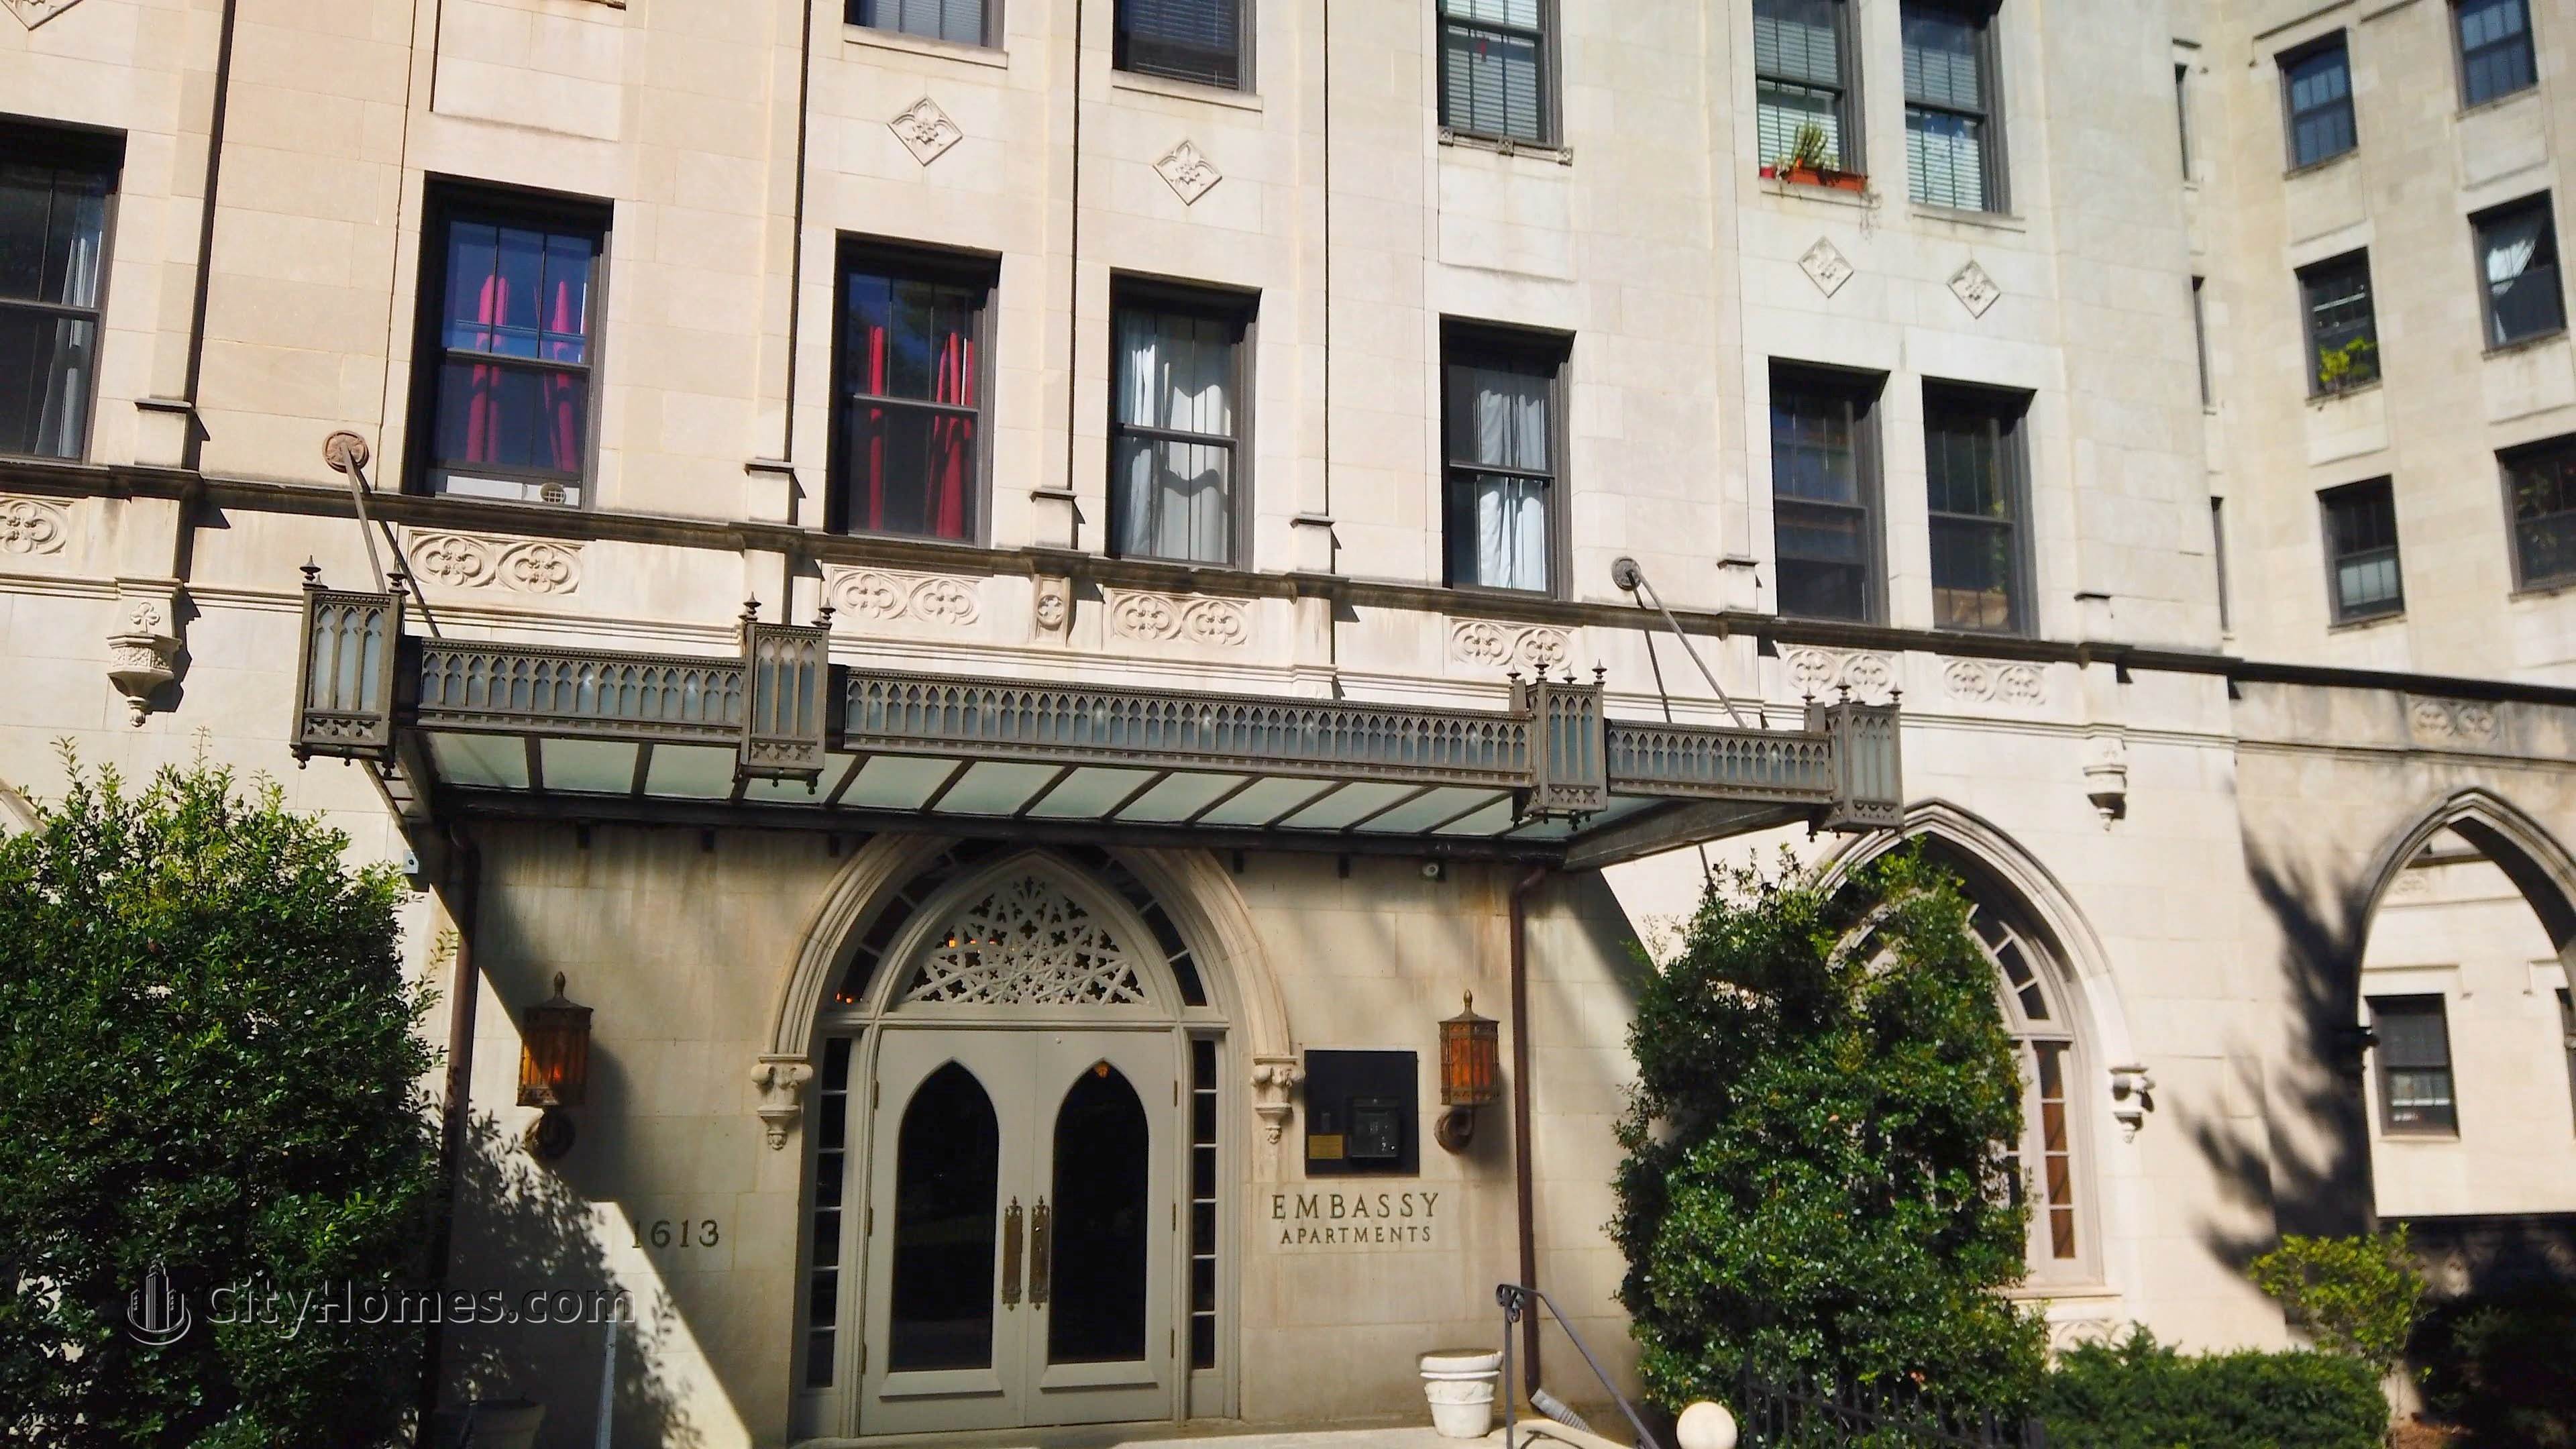 The Embassy Gebäude bei 1613 Harvard St NW, Mount Pleasant, Washington, DC 20009